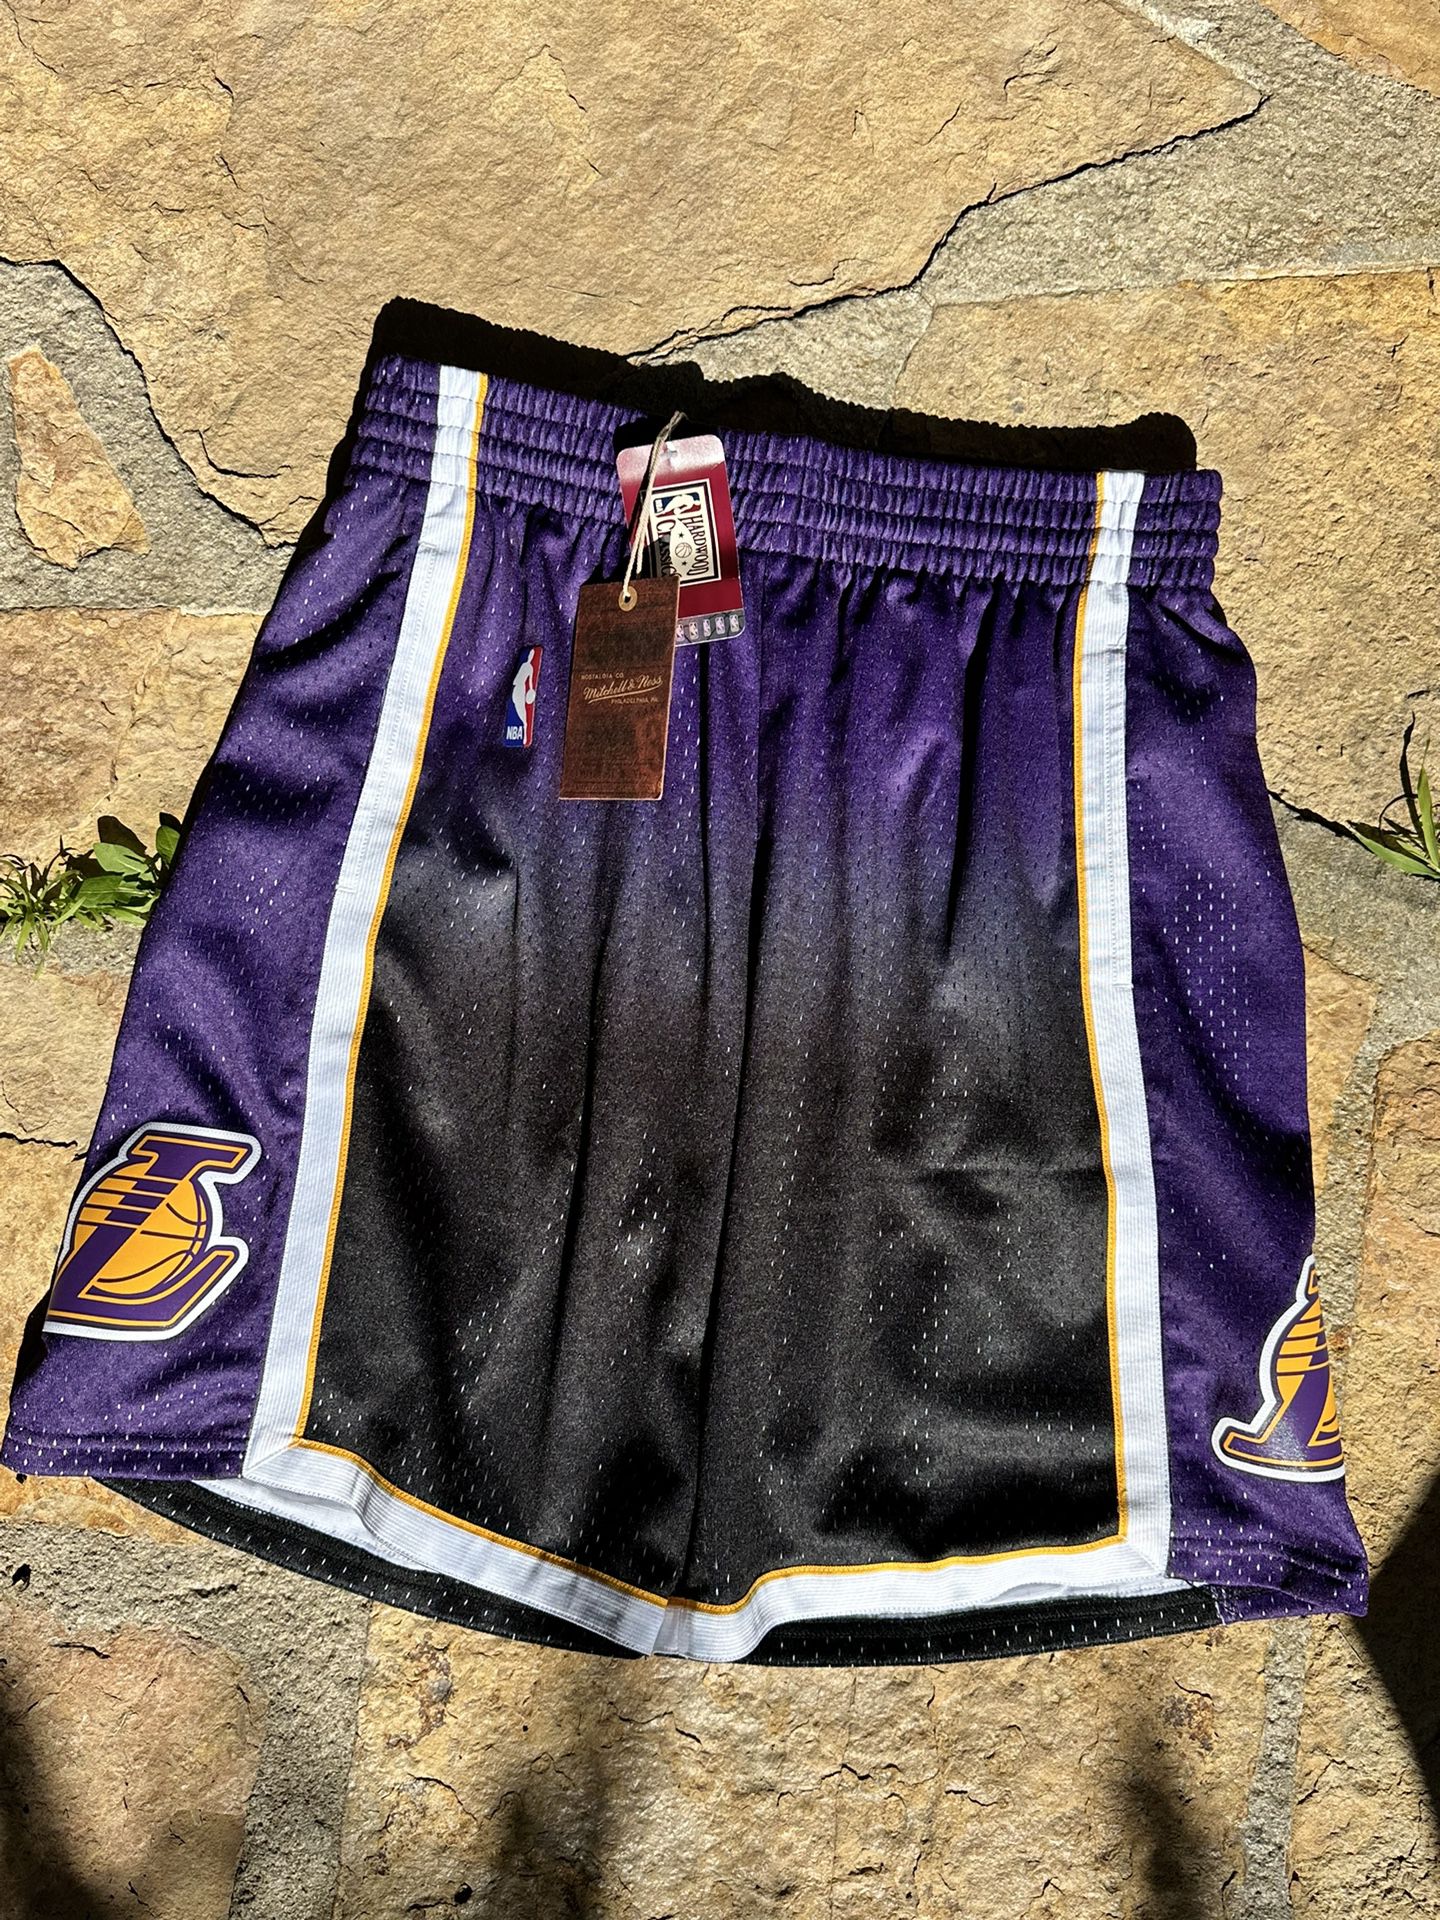 Mitchell & Ness Los Angeles Lakers NBA Authentic Fadeaway Swingman Shorts Size Large NWT Kobe 